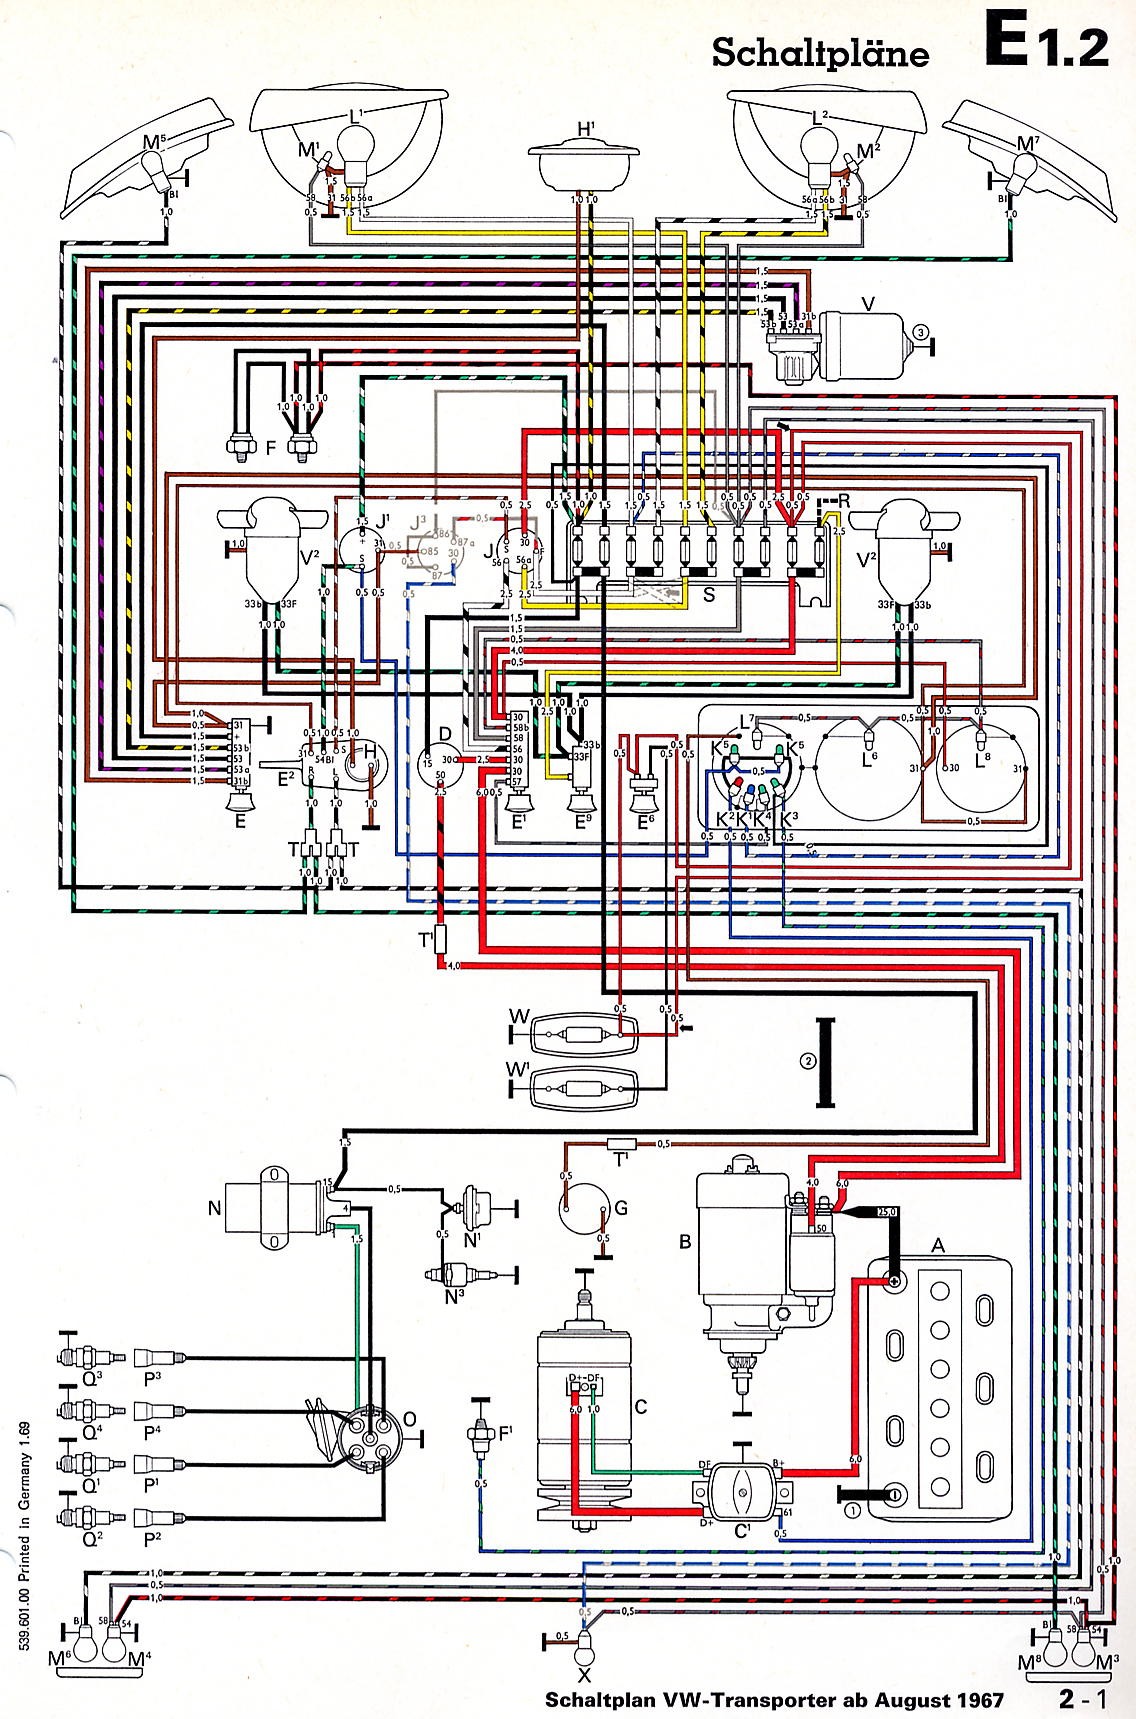 bad boy wiring diagrams wire center u2022 rh 108 61 128 68